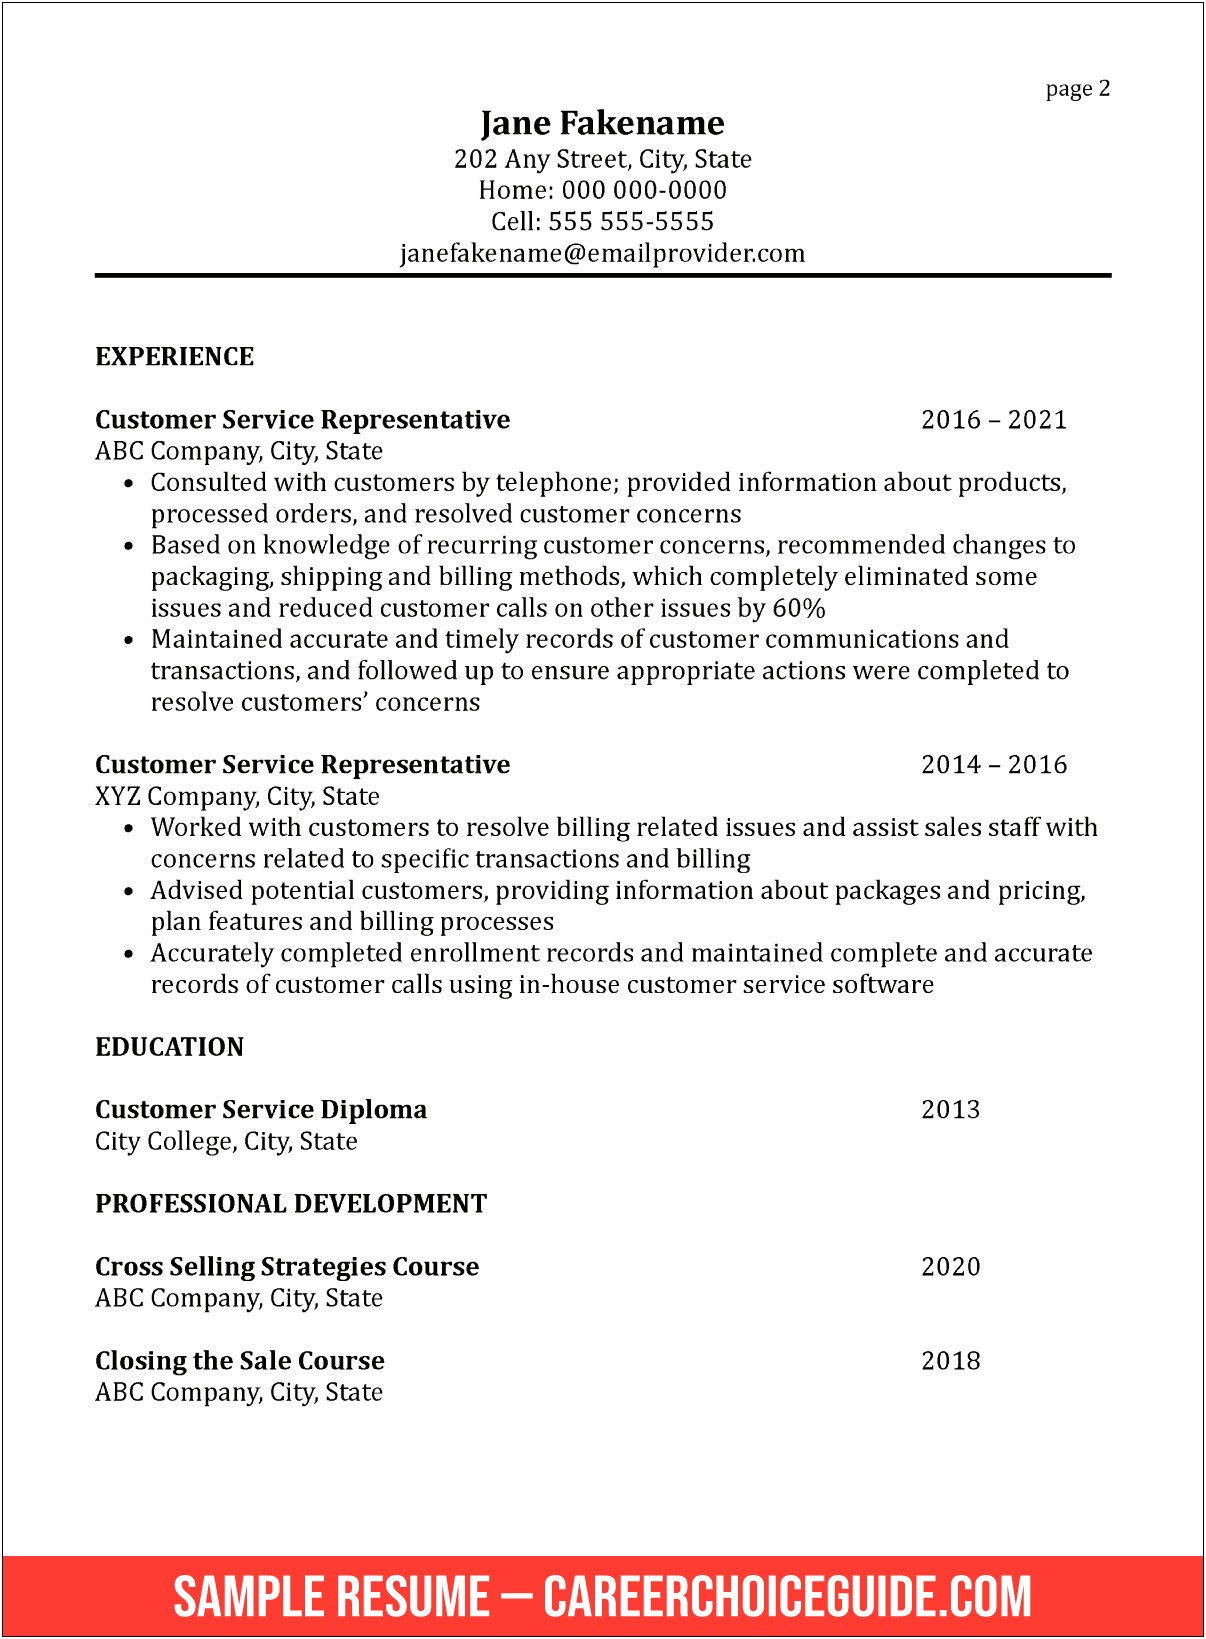 Professional Customer Service Job Description For Resume